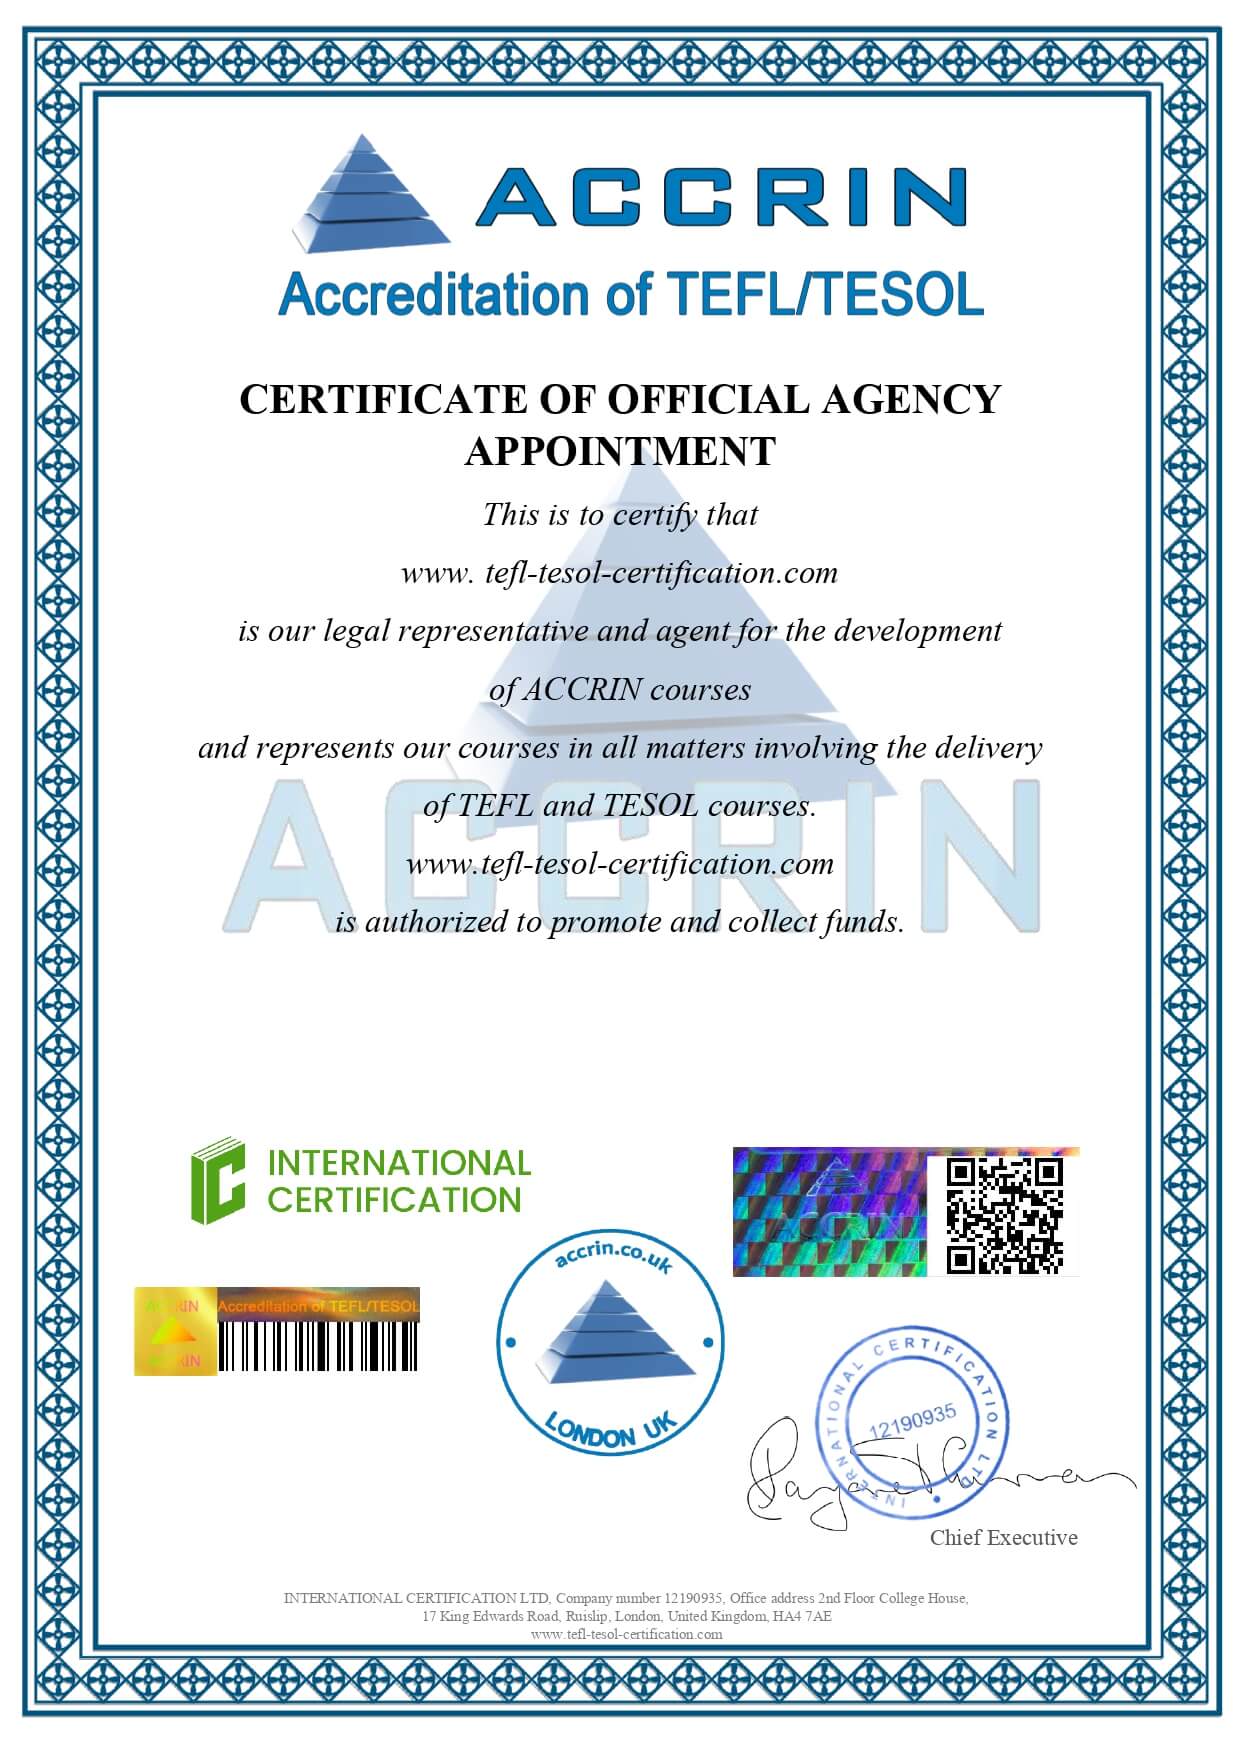 Certificate accreditation